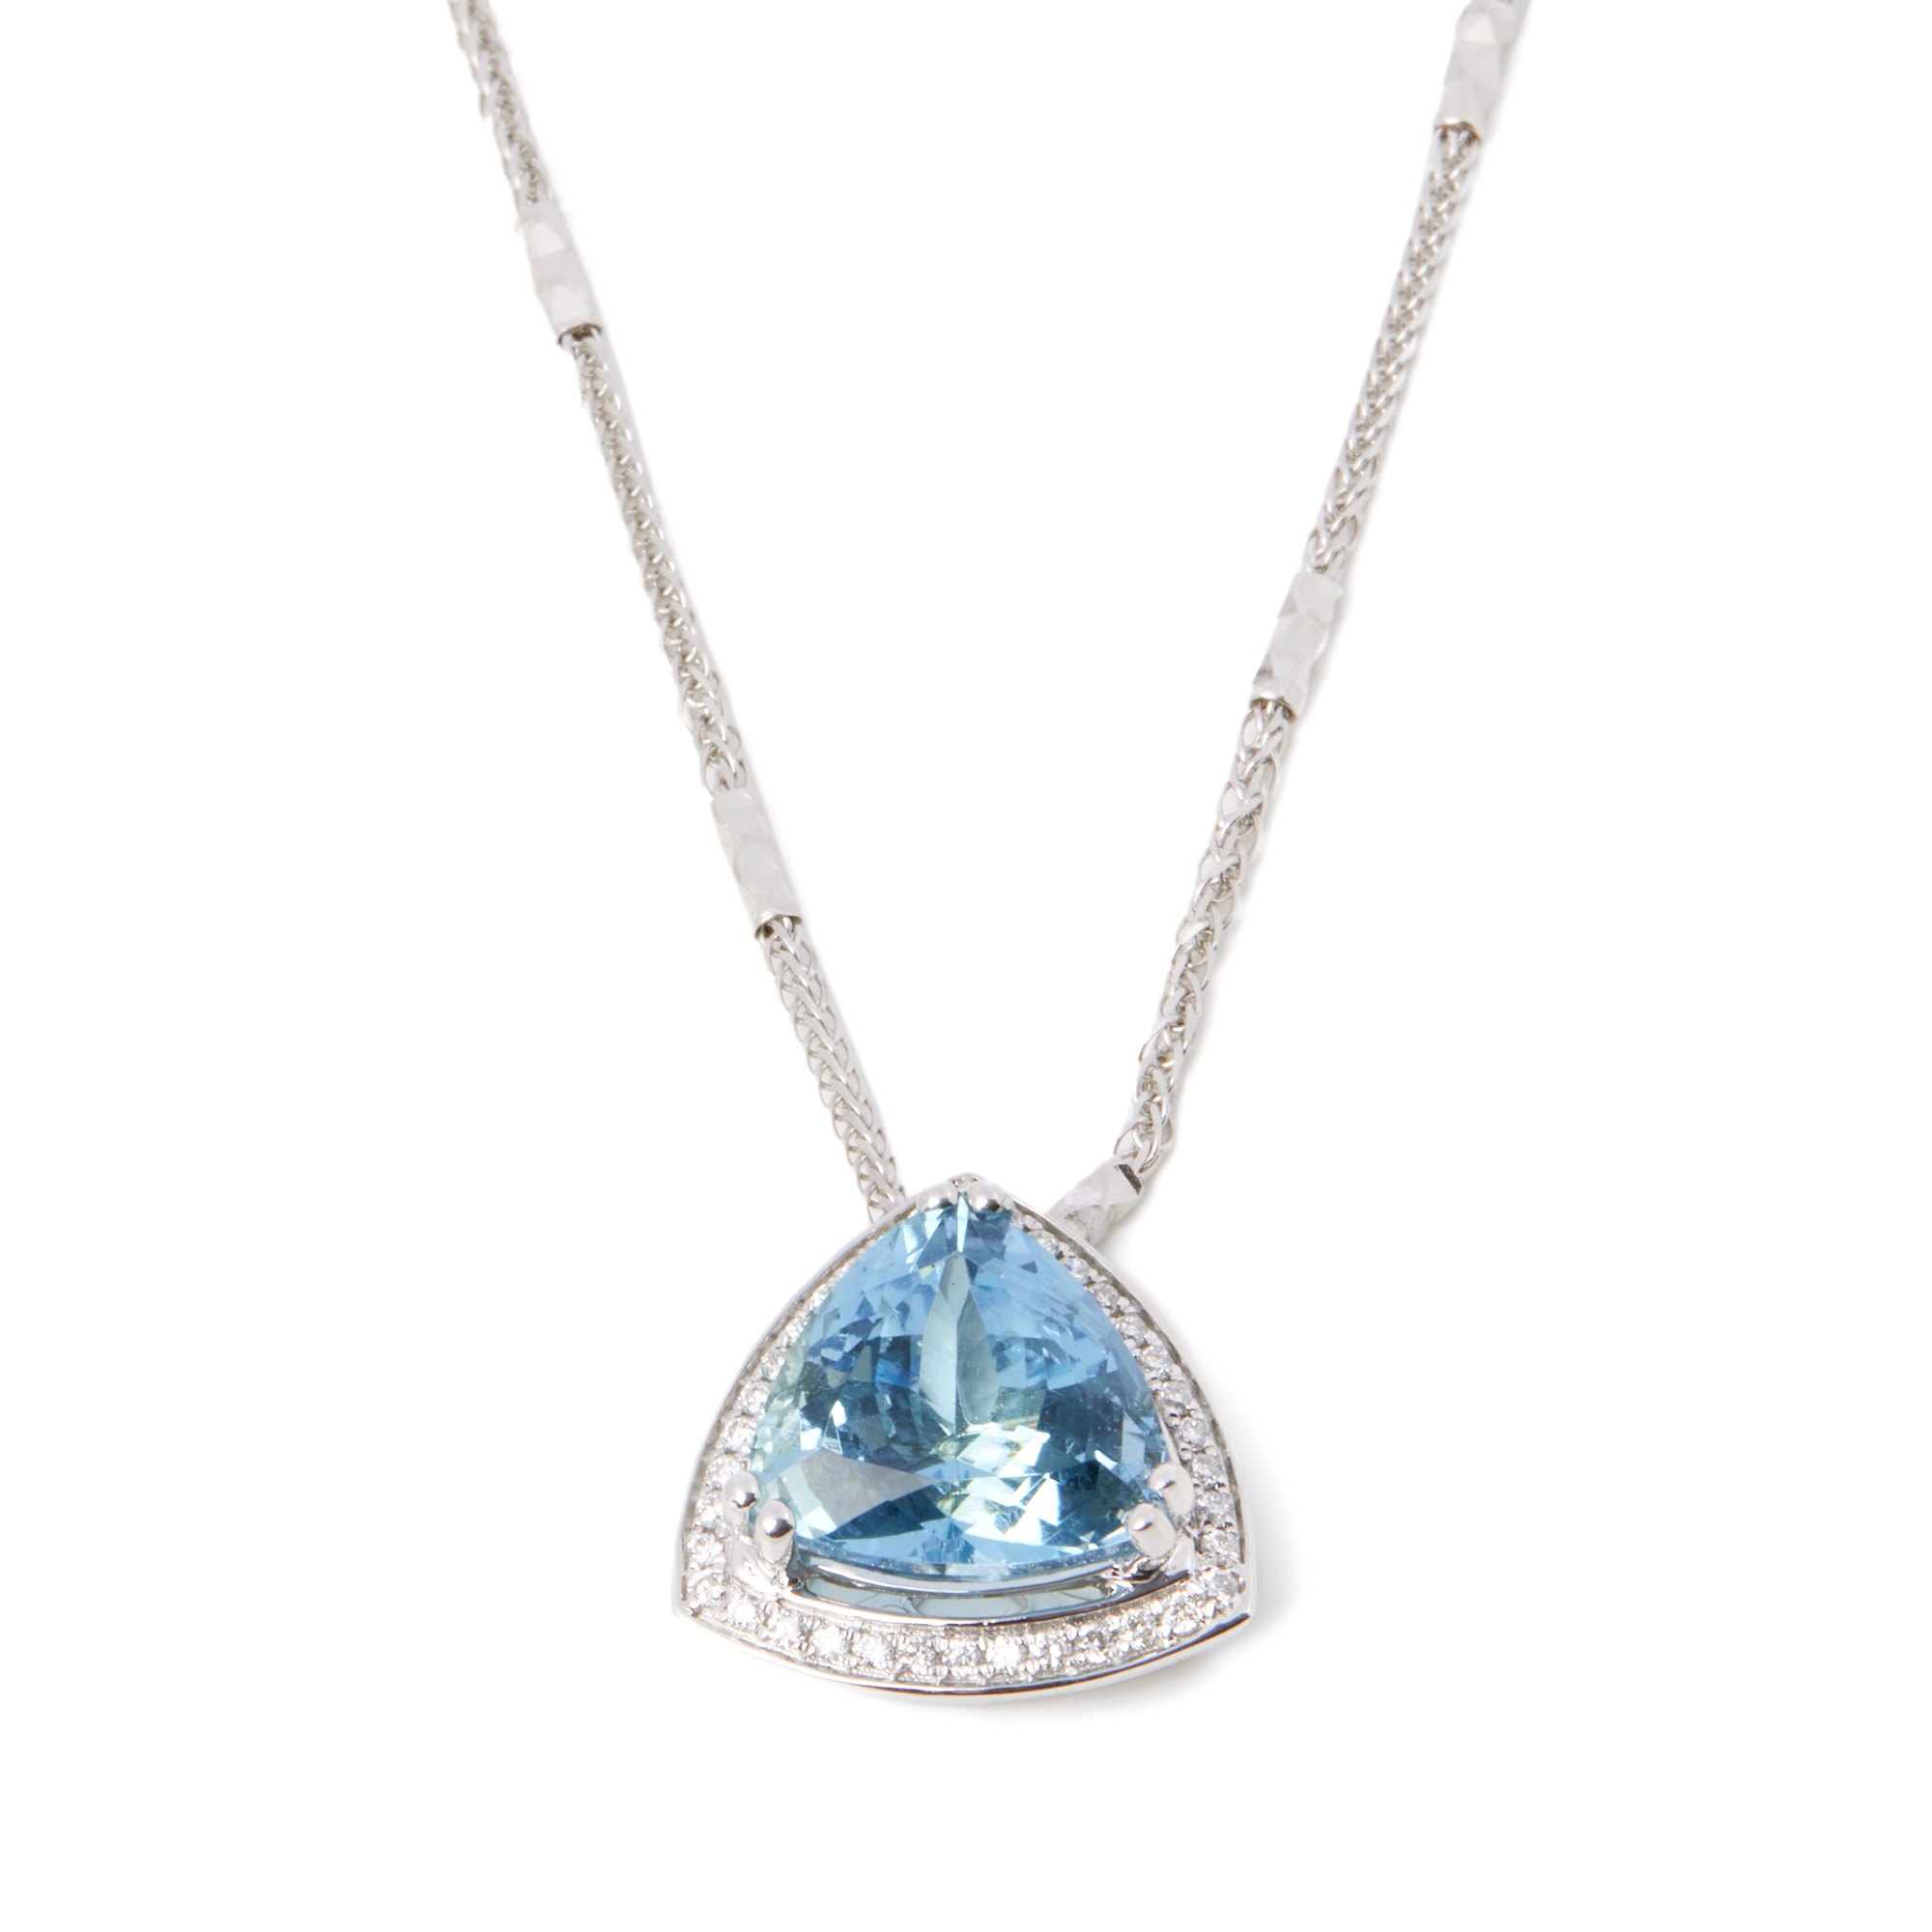 David Jerome Certified 5.76ct Trillion Cut Aquamarine and Diamond Pendant